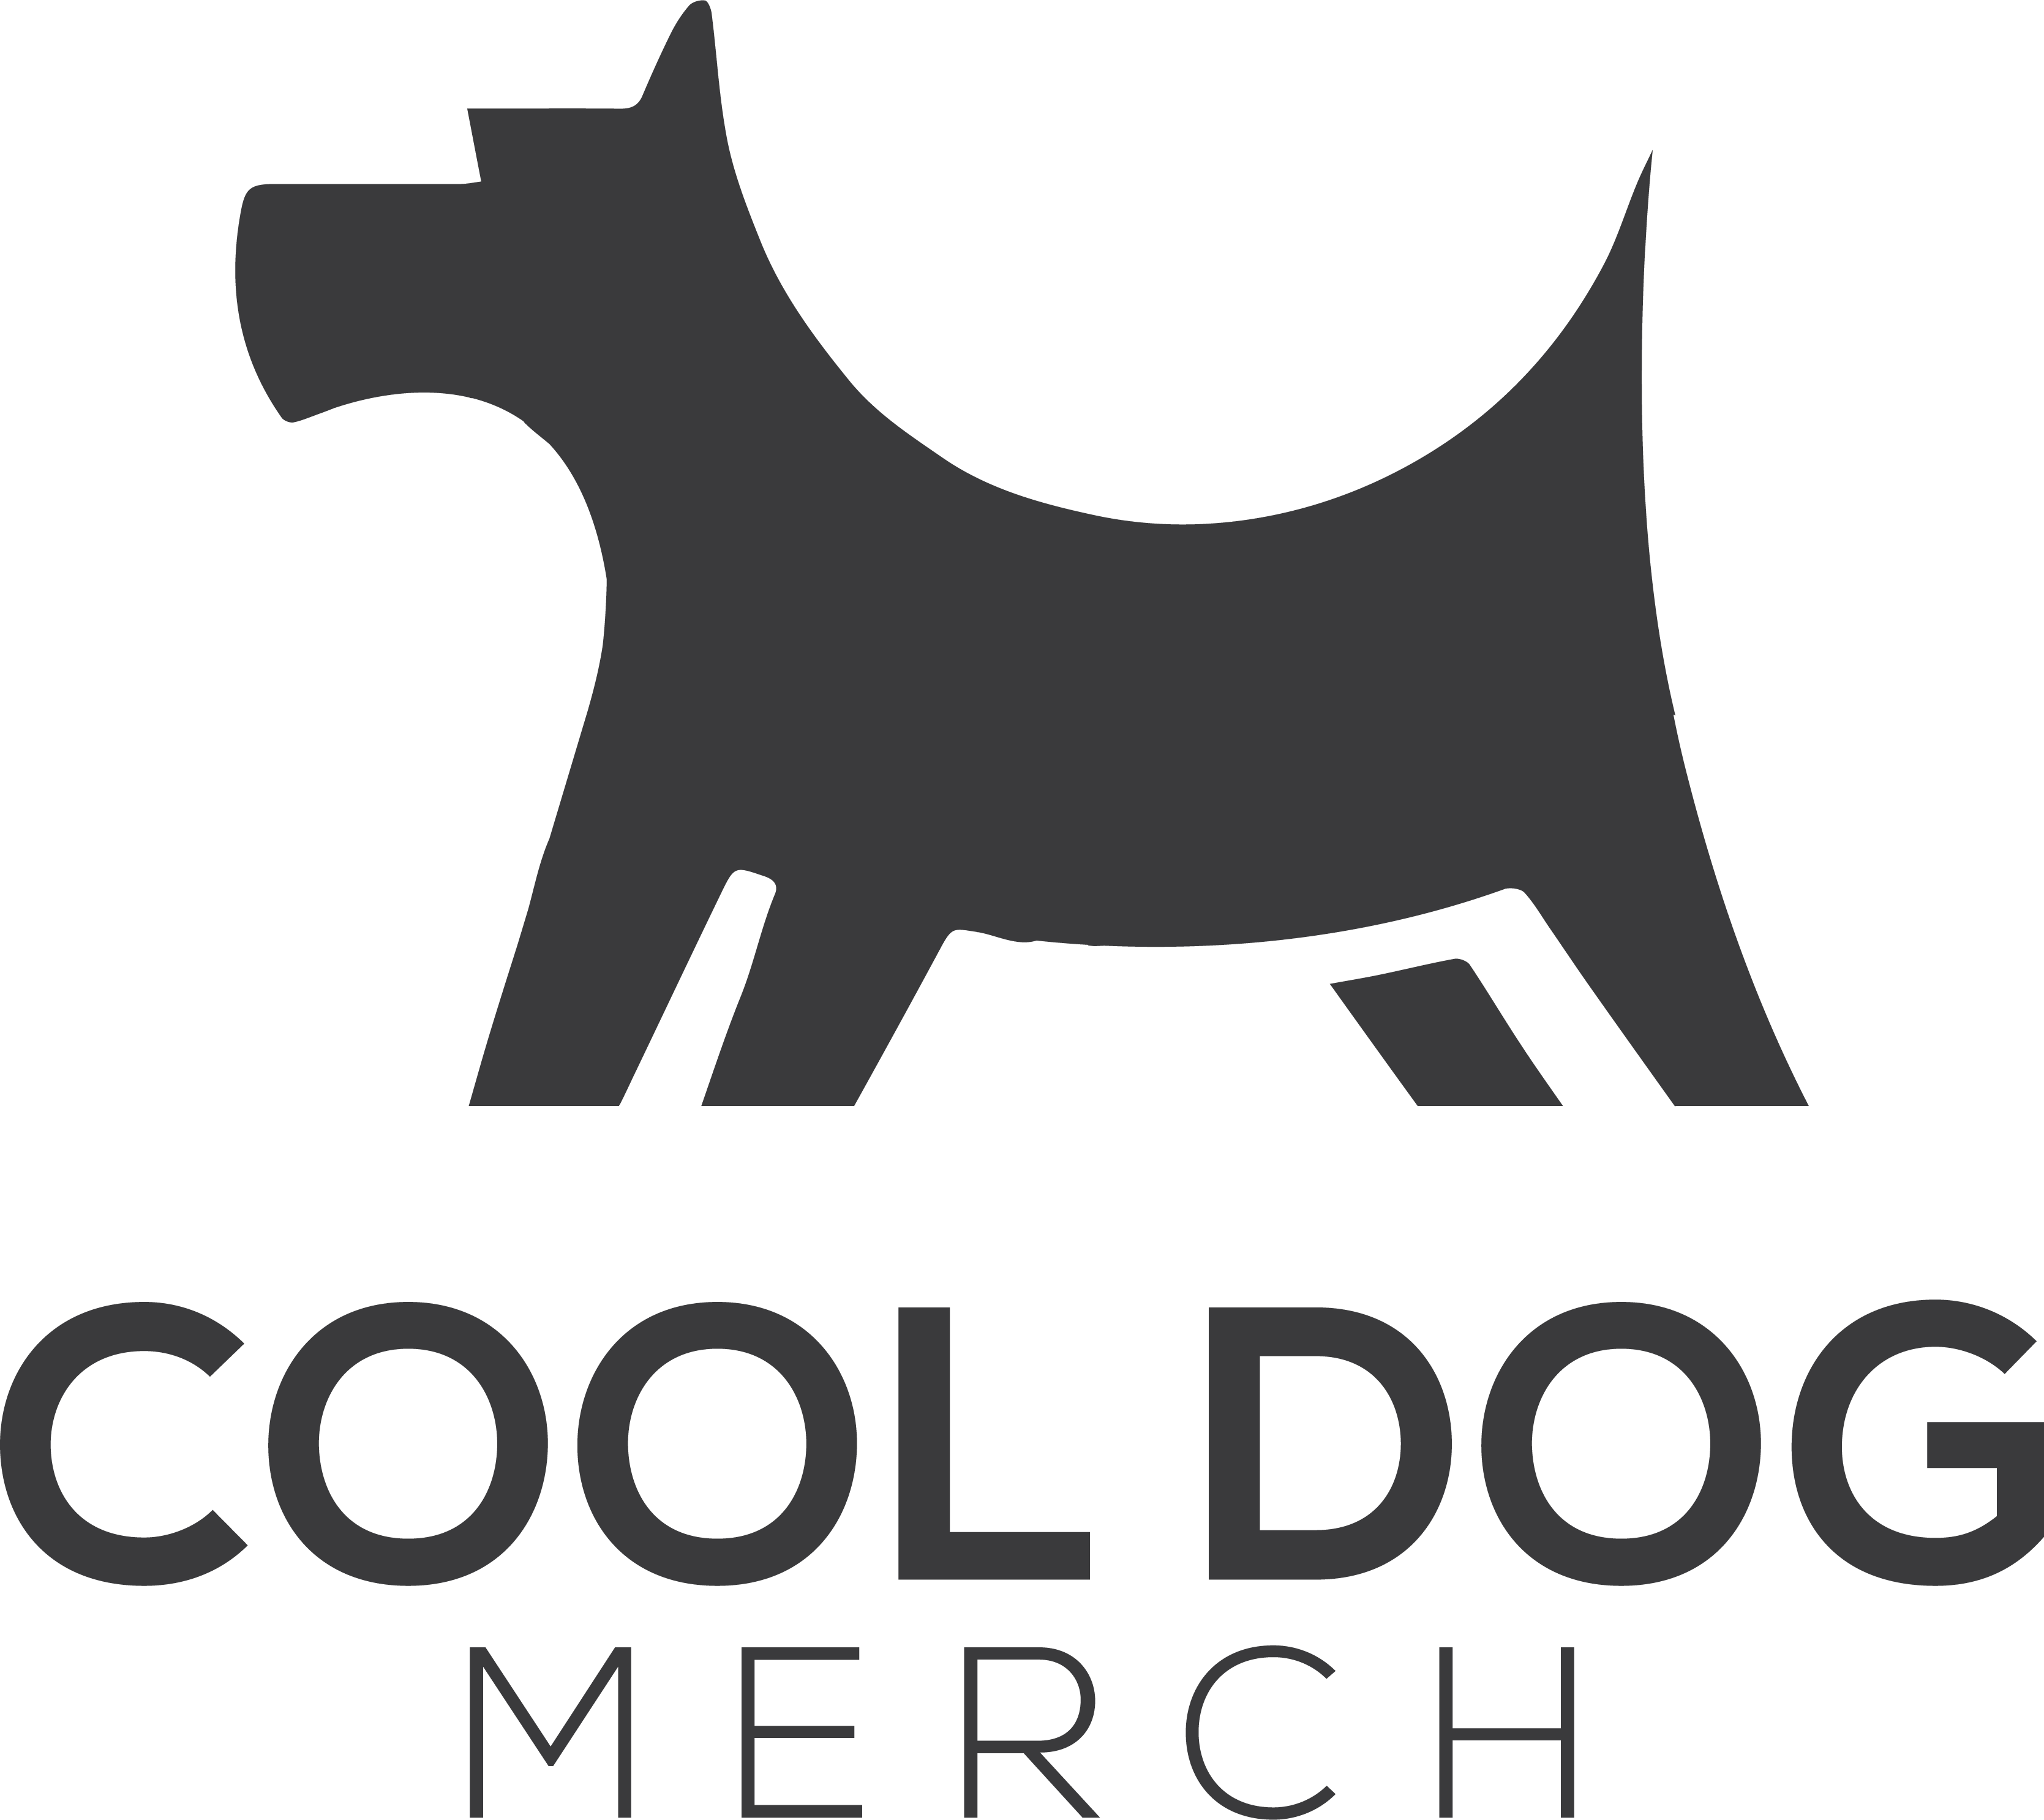 Cool Dogs Logo - Cool Dog Merch